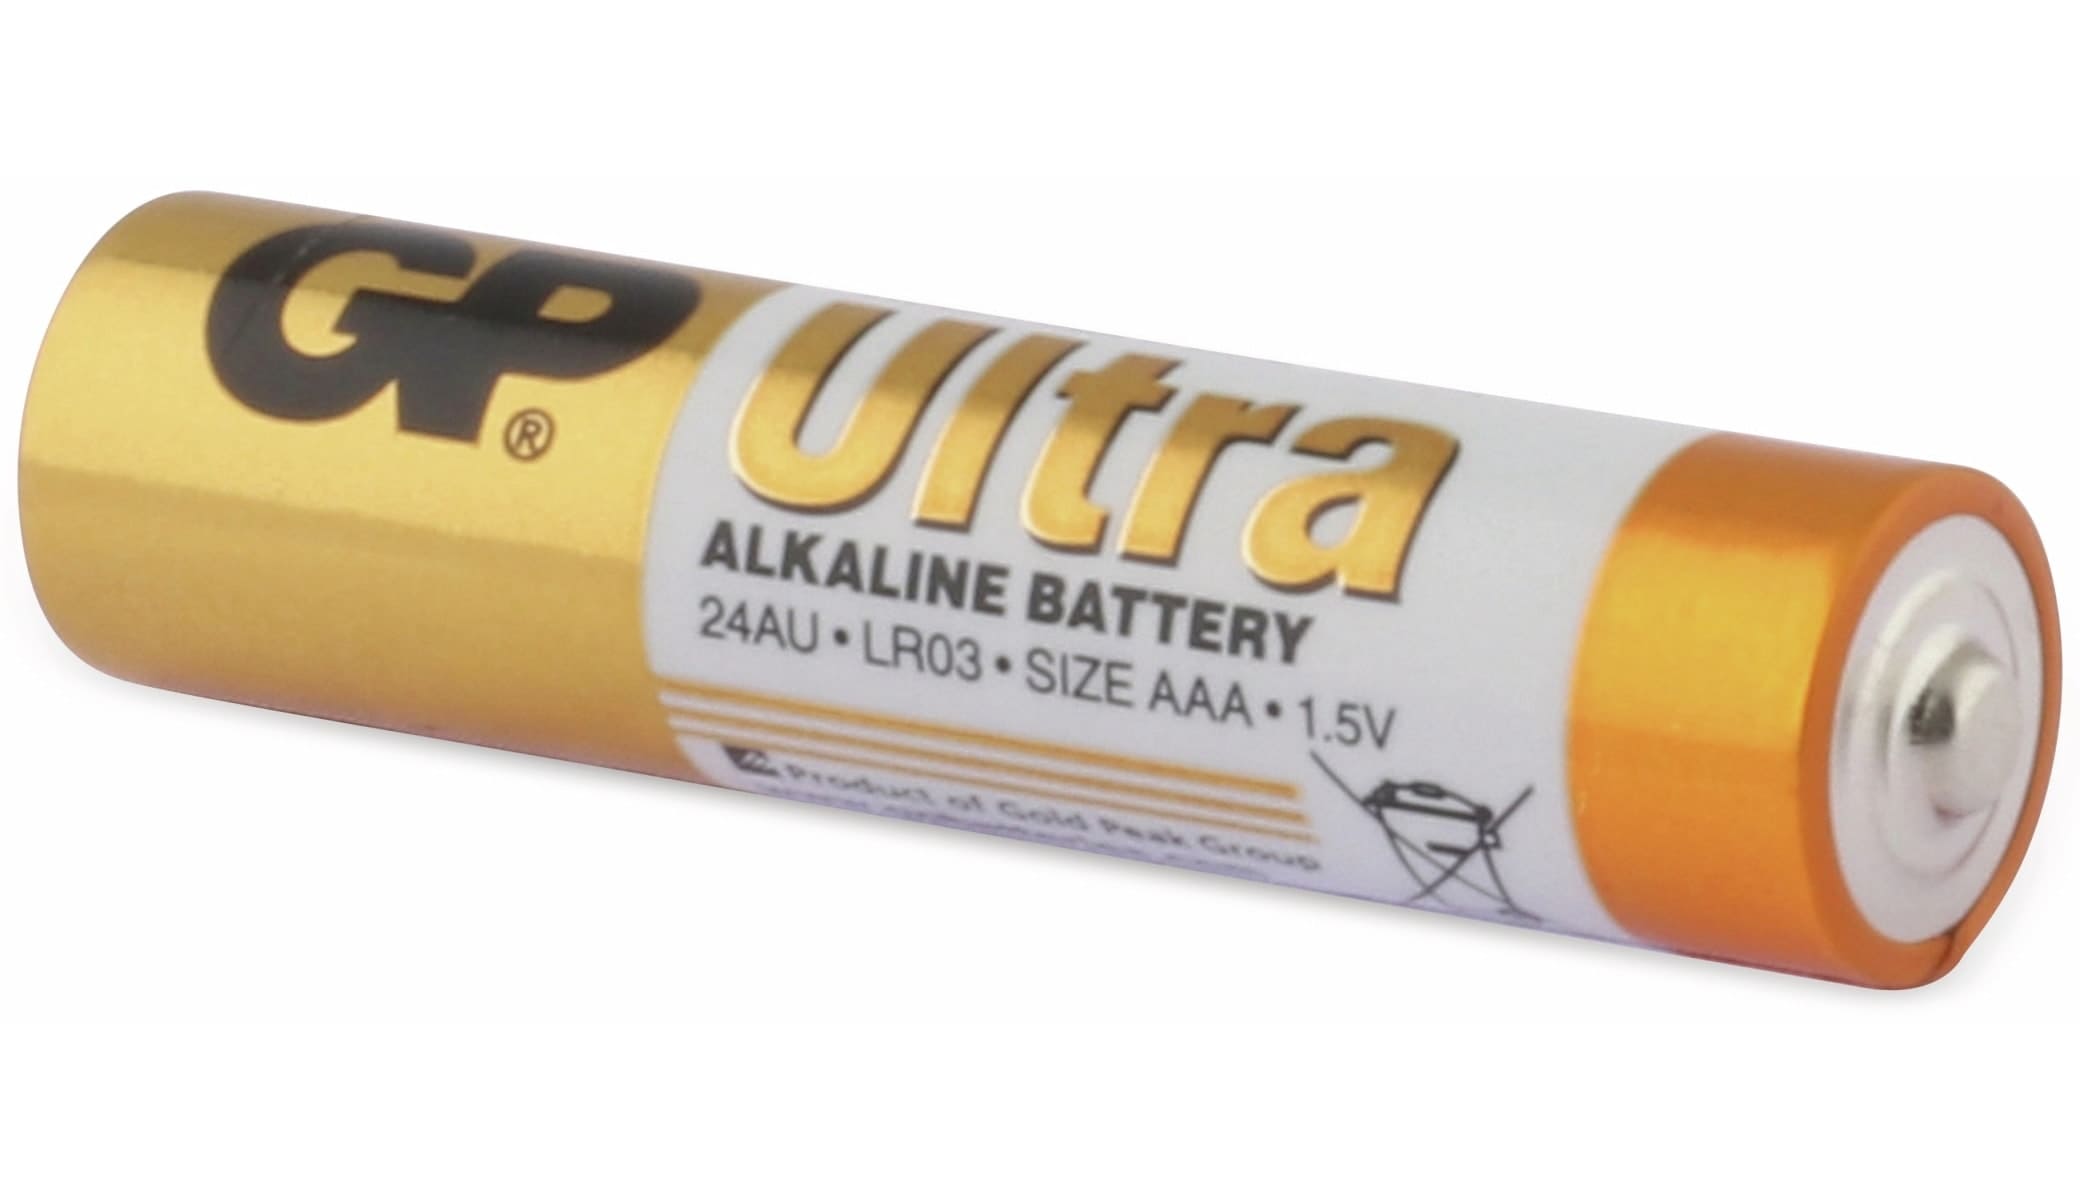 GP Micro-Batterien ULTRA ALKALINE, 4 Stück